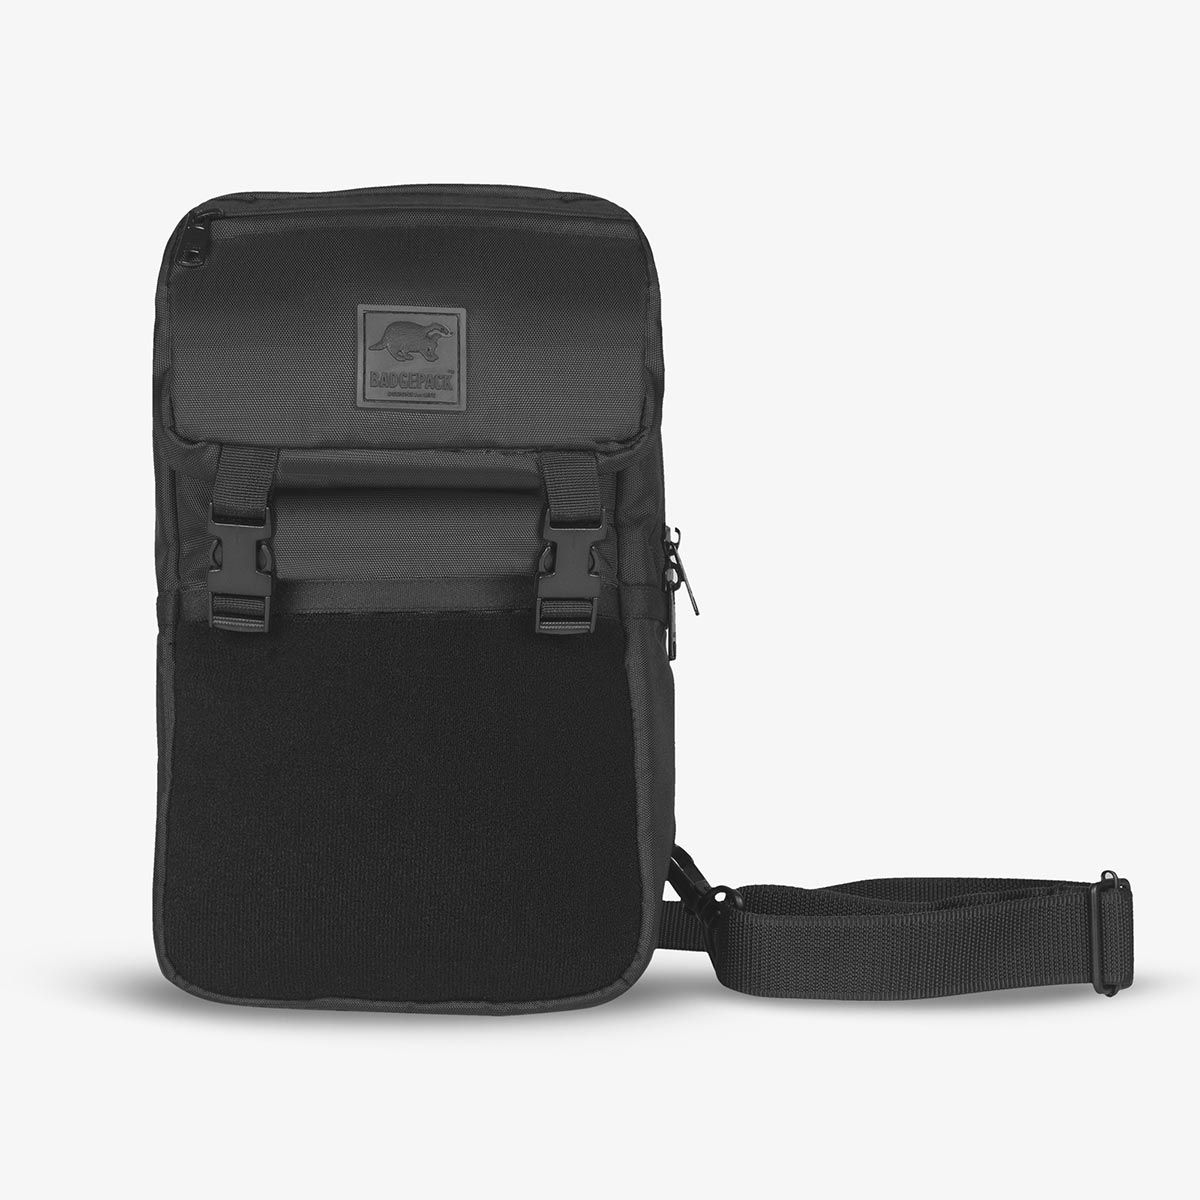 BadgePack Designs Hiromi Hip Pack Cross body Bag Black with 5 Printed Badges